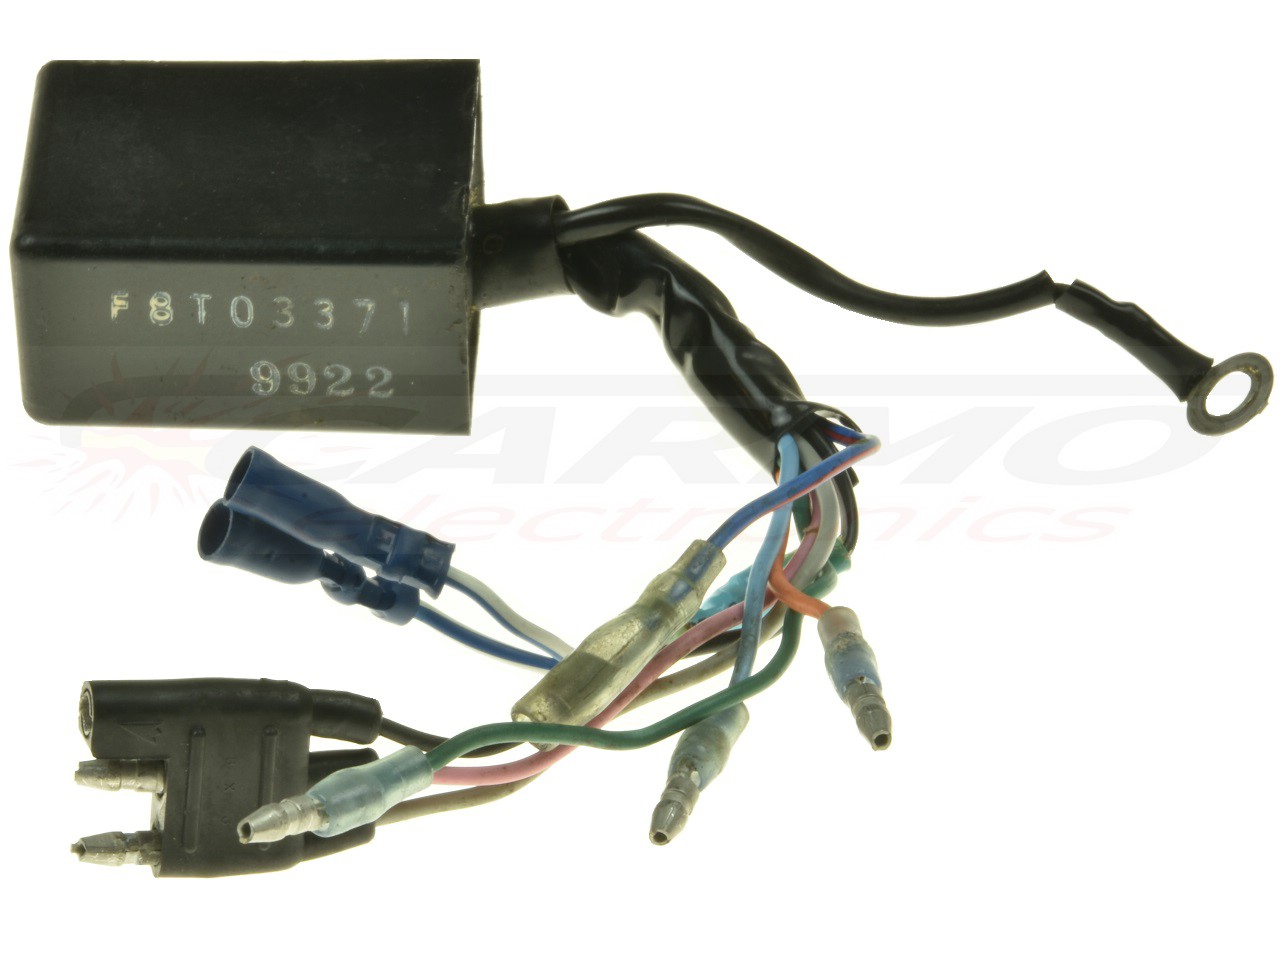 Suzuki DT50 Outboard CDI dispositif de commande boîte noire (32900-95303, F8T03371)